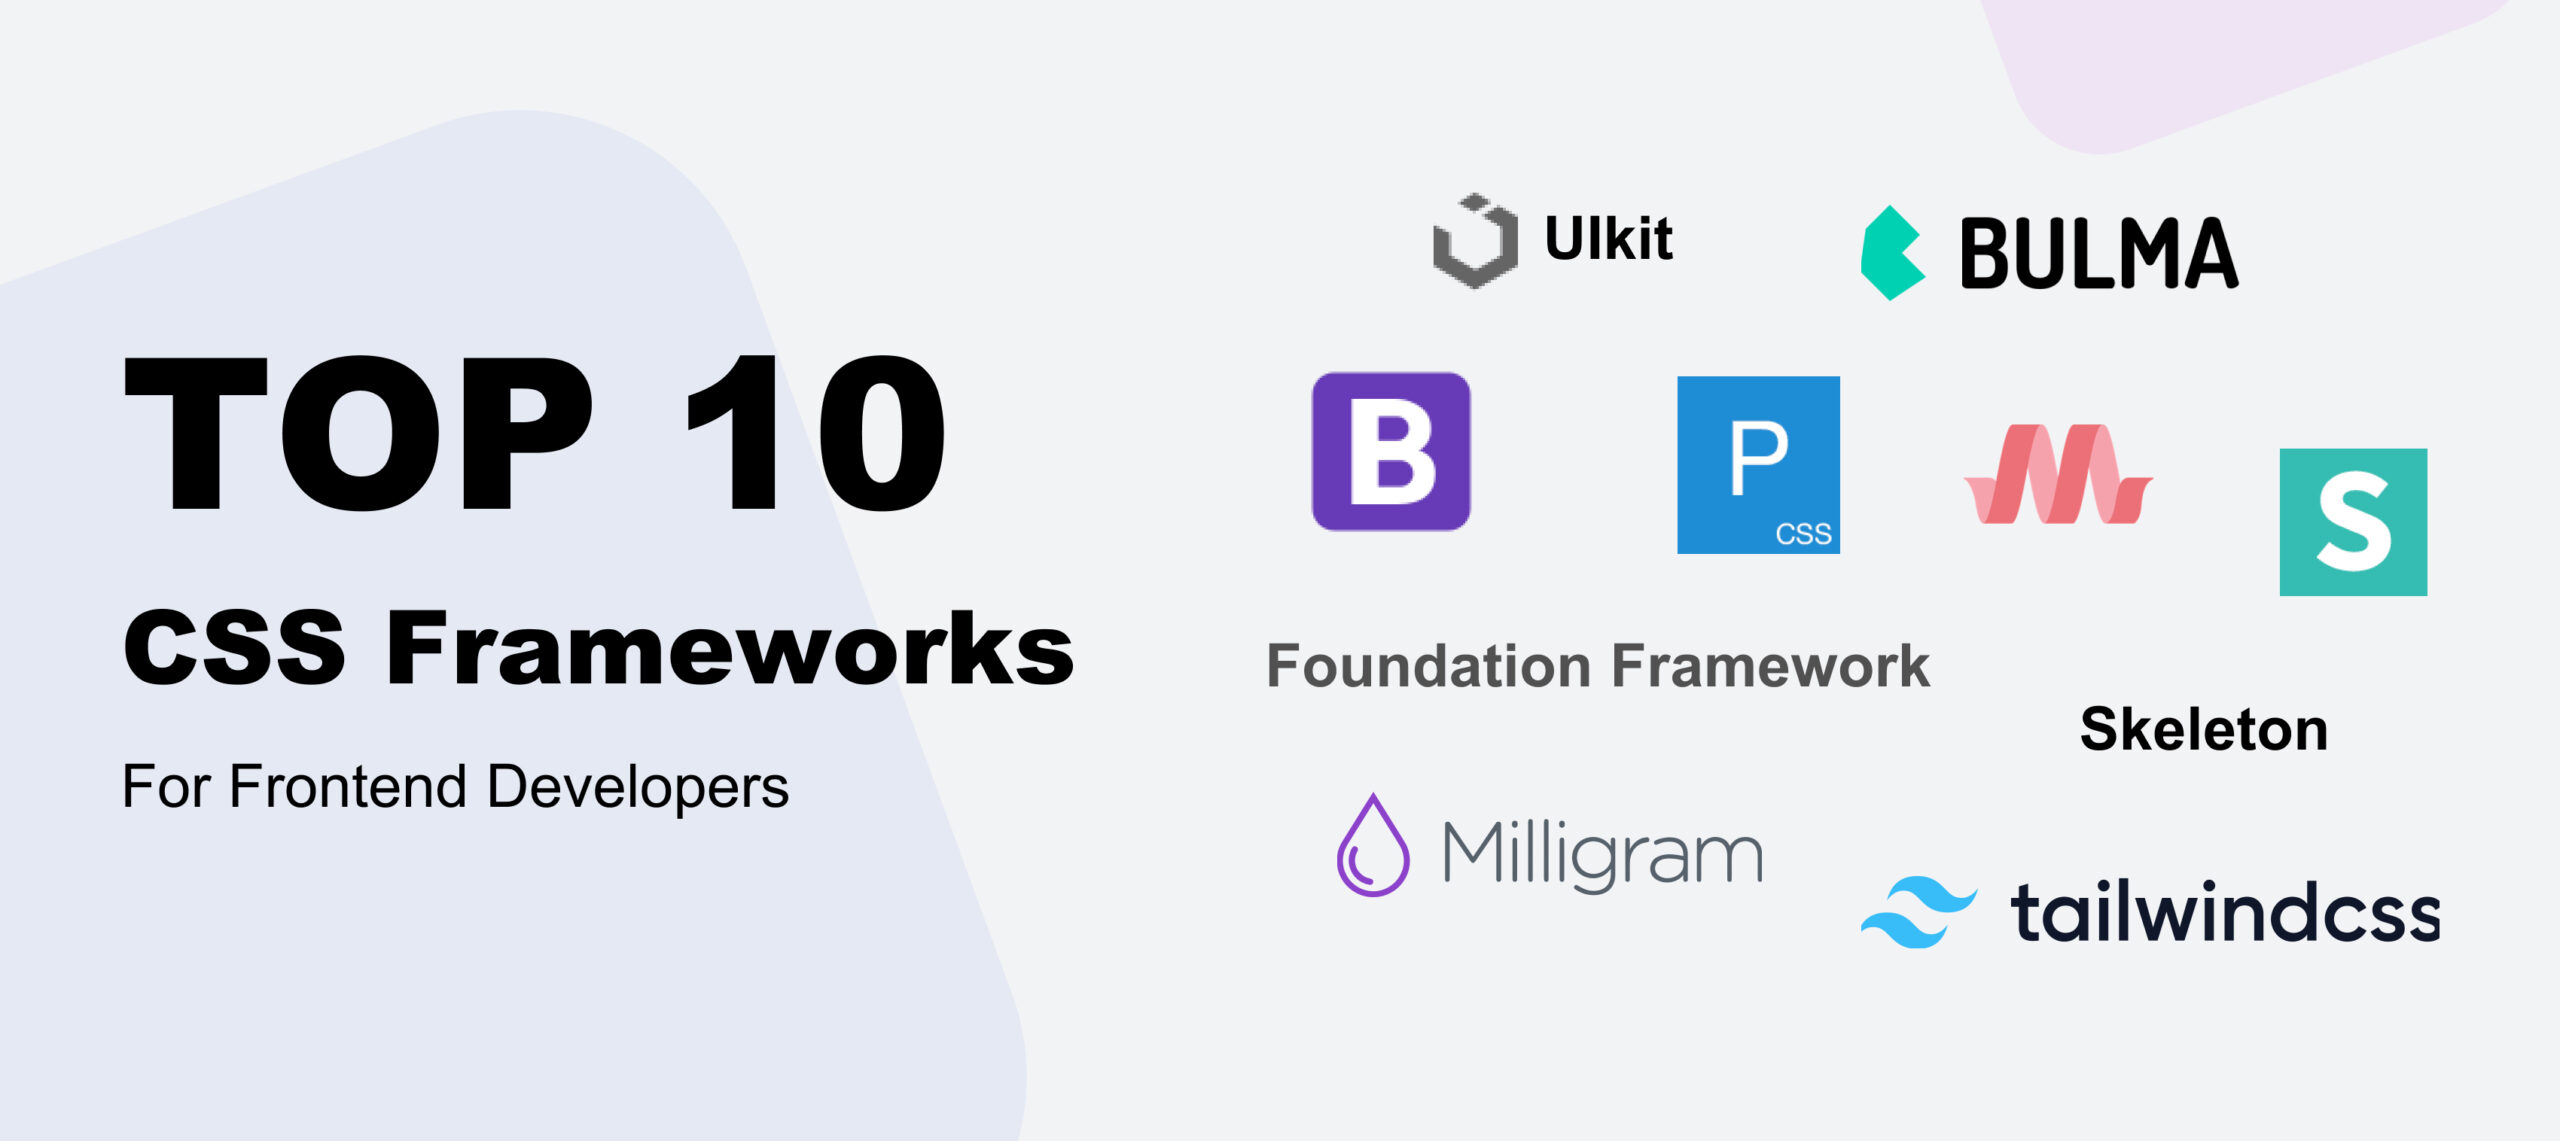  Top 10 CSS Frameworks for Frontend Developers